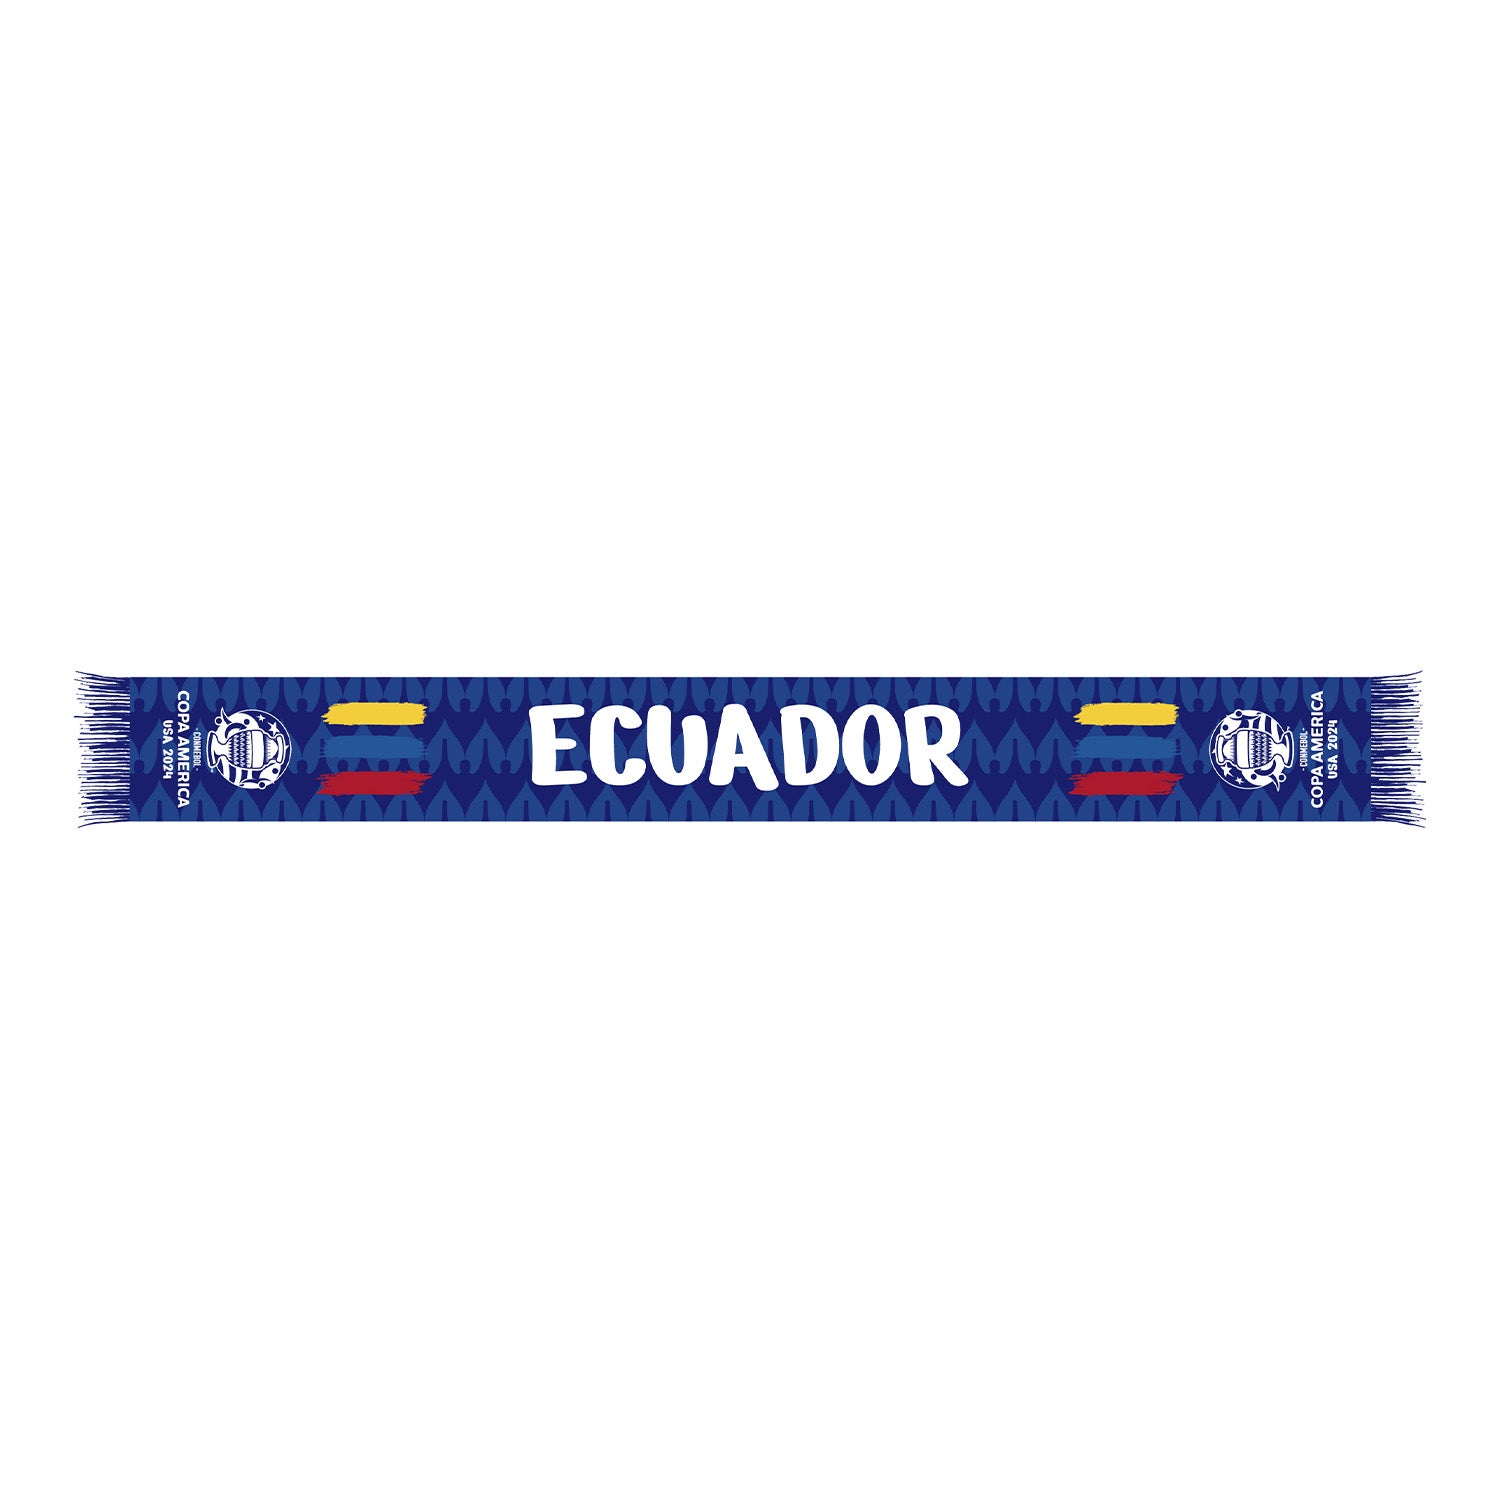 Ecuador COPA America Scarf - Back View